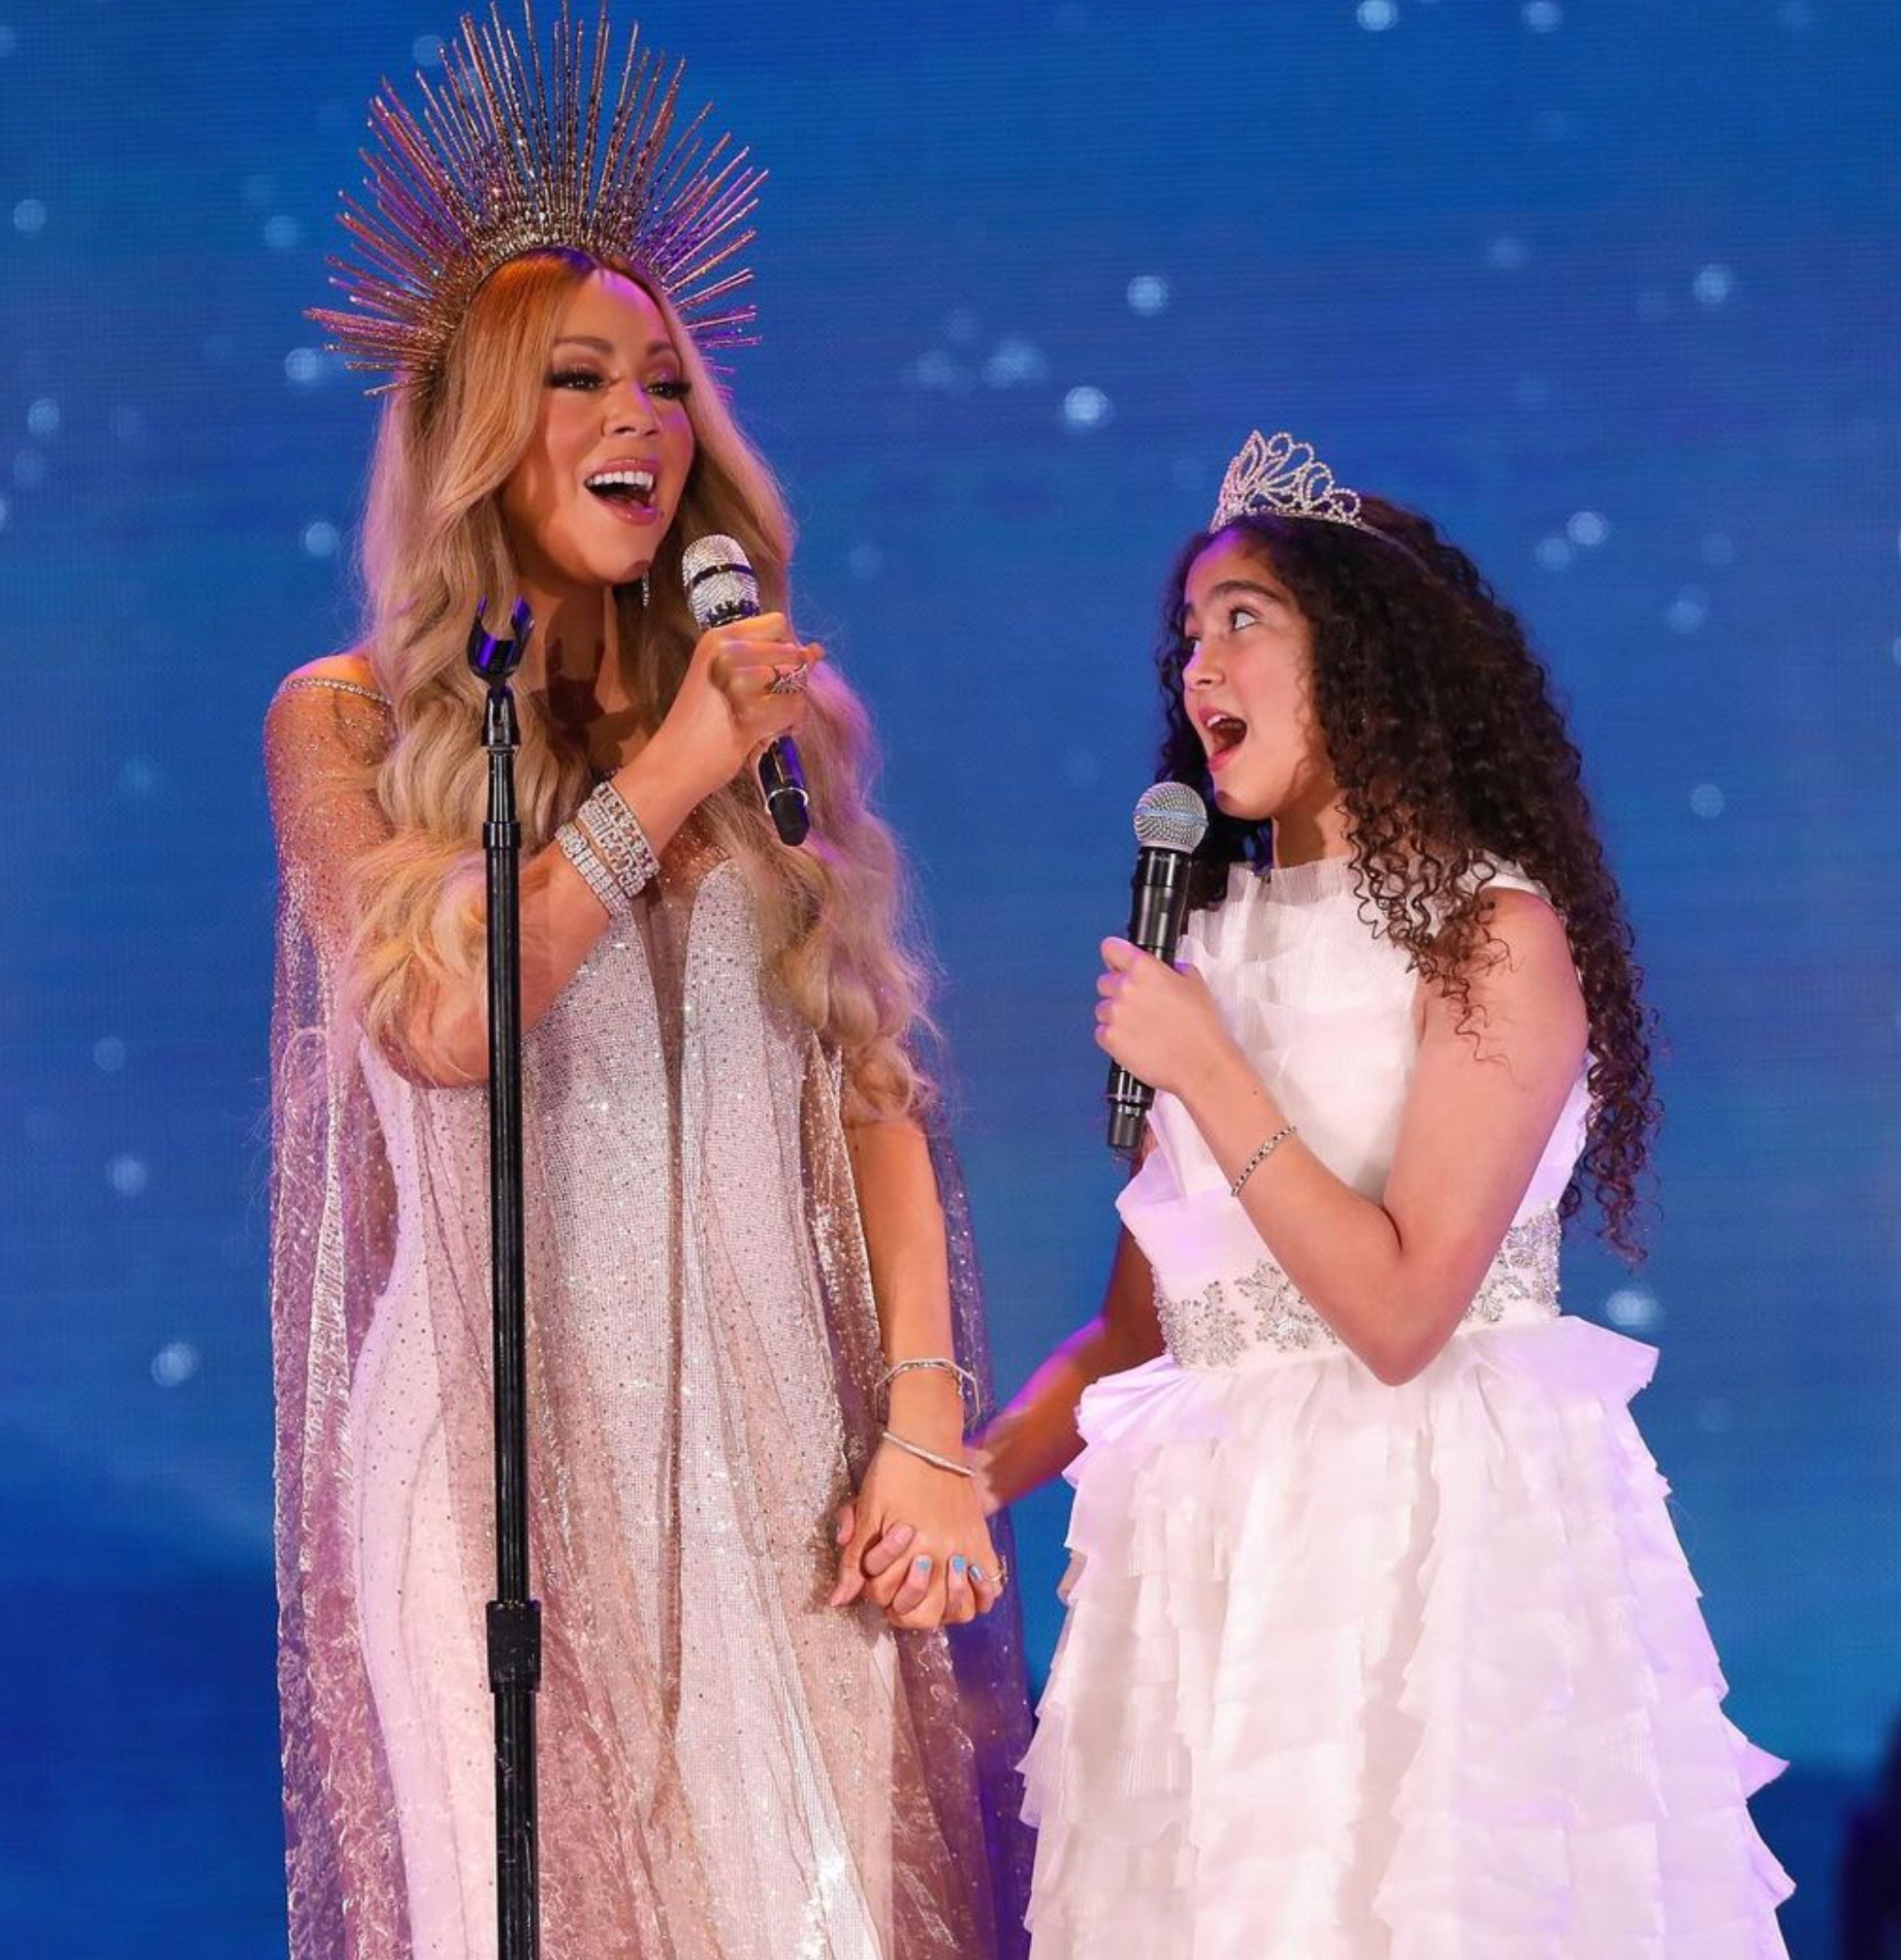 Mariah Carey stars in festive Victoria's Secret holiday campaign